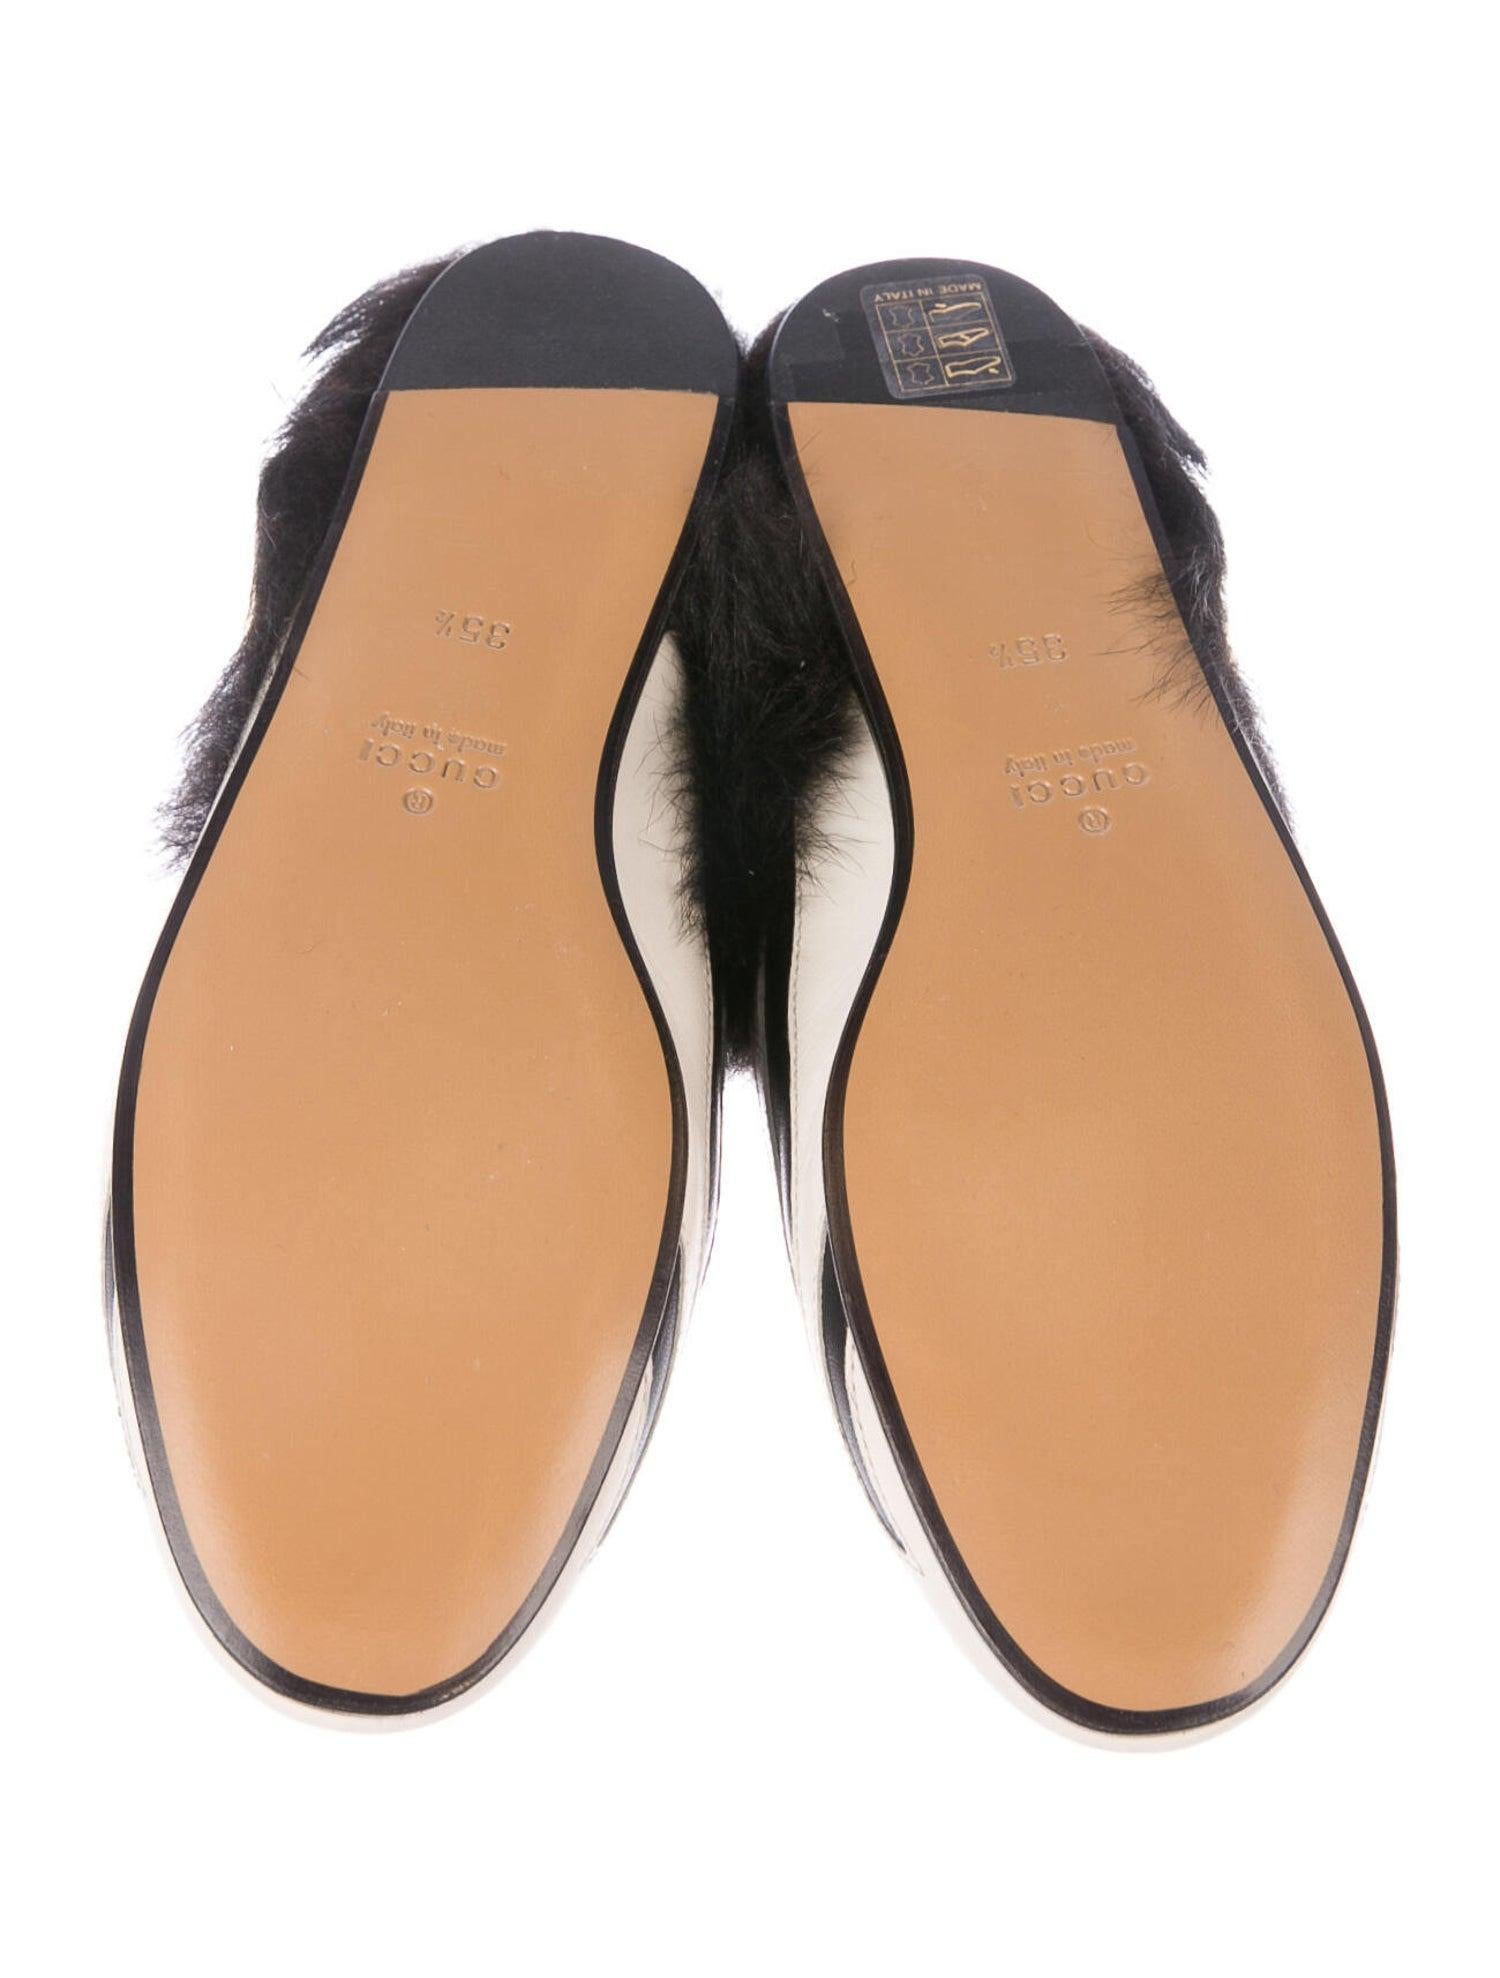 New Gucci Kendall Jenner Princetown  Zebra Faux Fur Loafers Slides Flats Sz 35.5 1